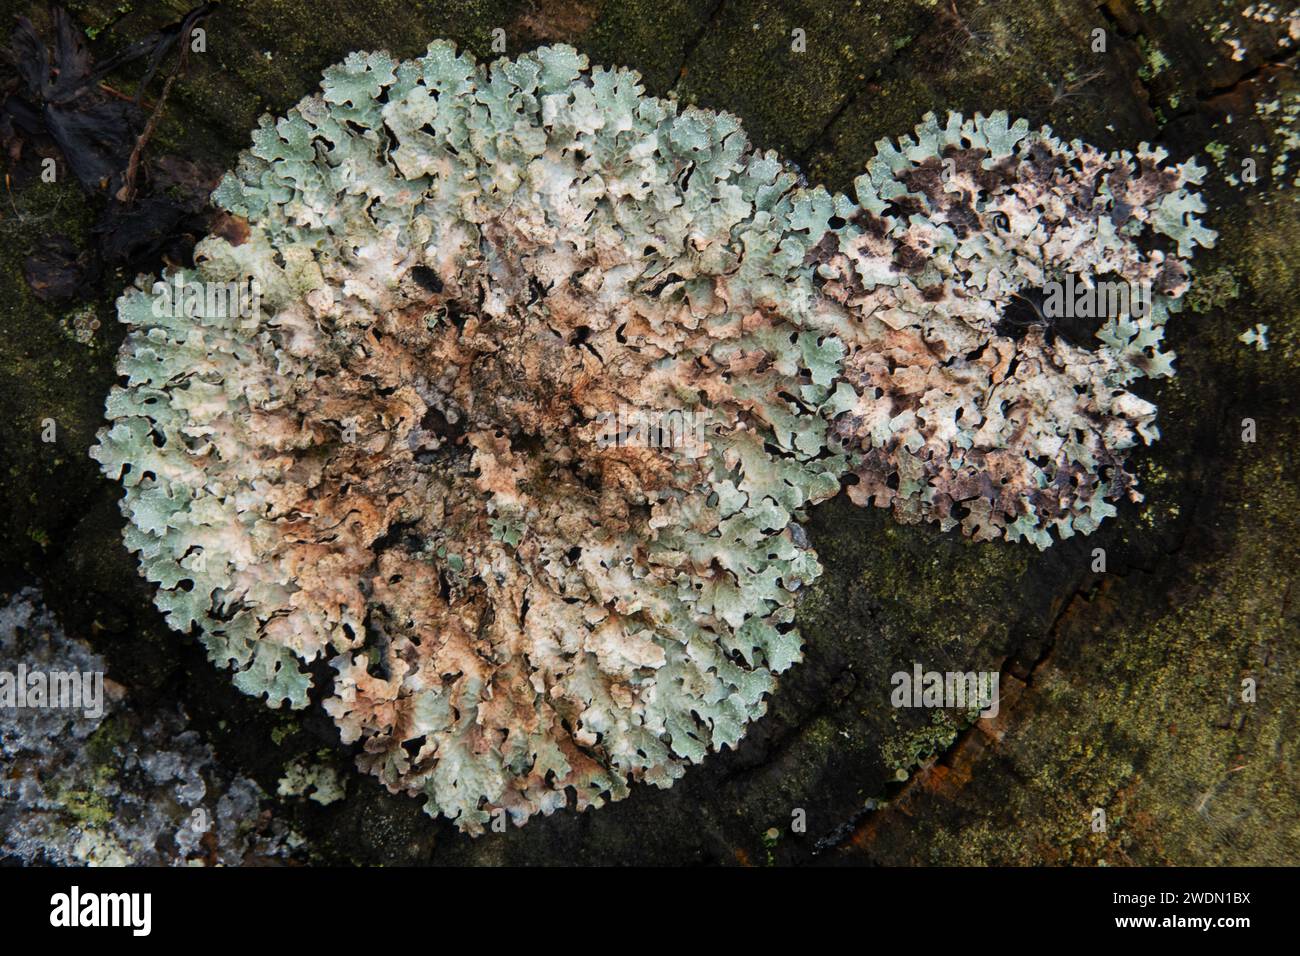 Foliose lichen, Hammered shield lichen, growing on wet, rotting tree trunk Stock Photo